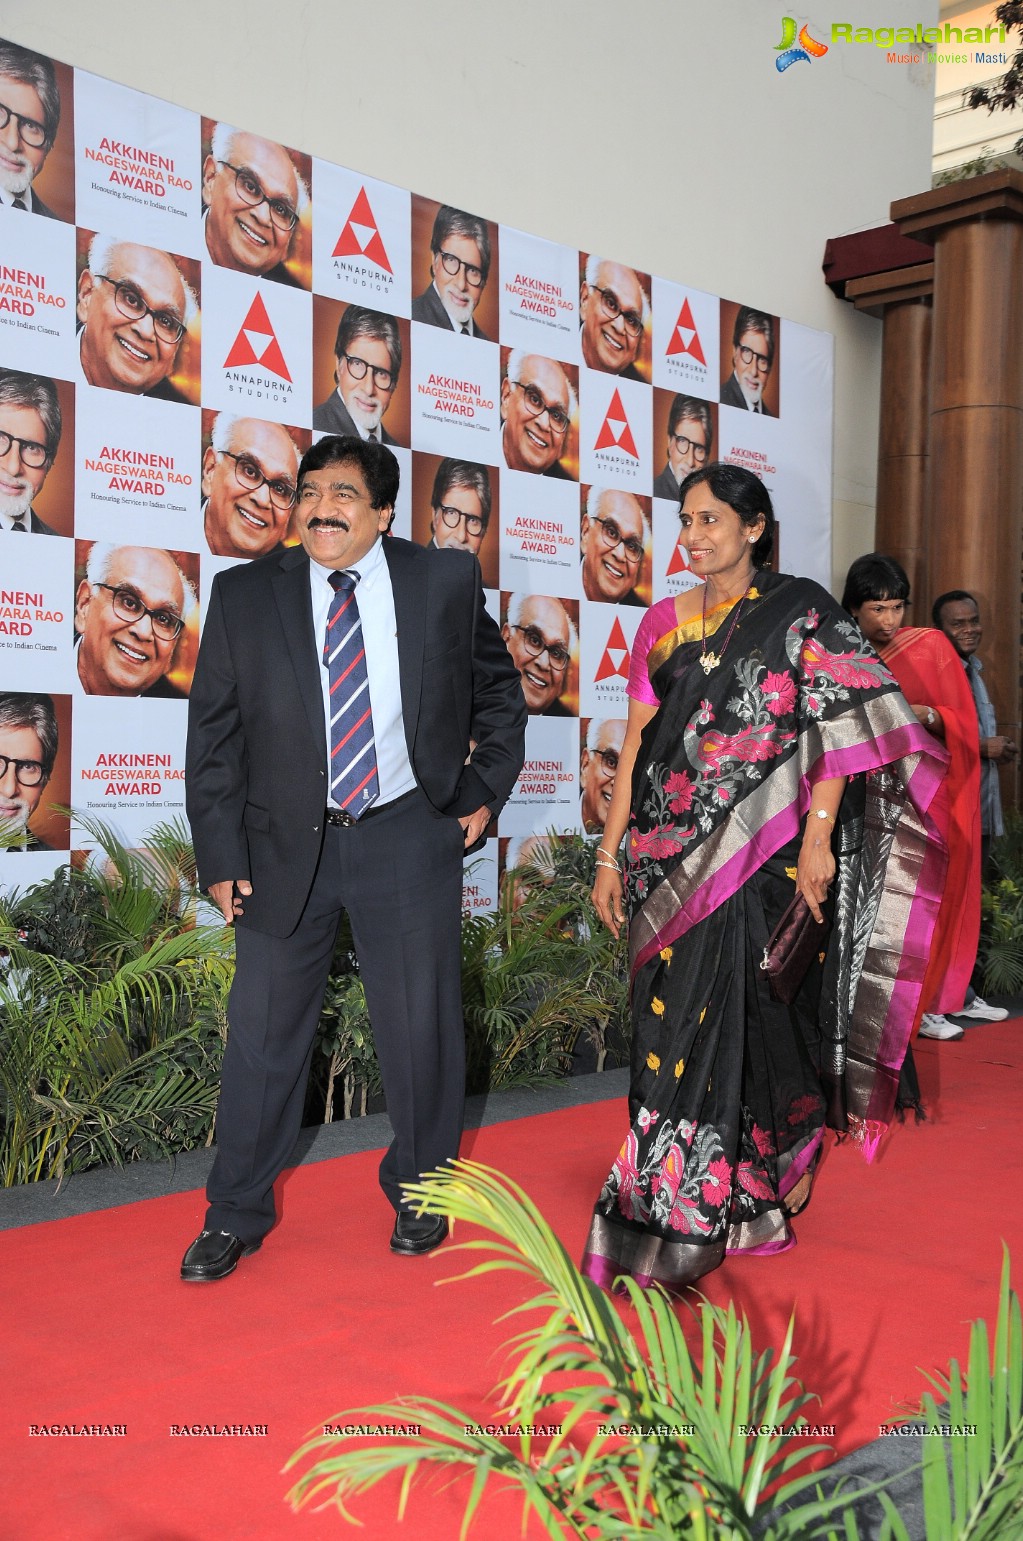 ANR Award 2013 to Amitabh Bachchan